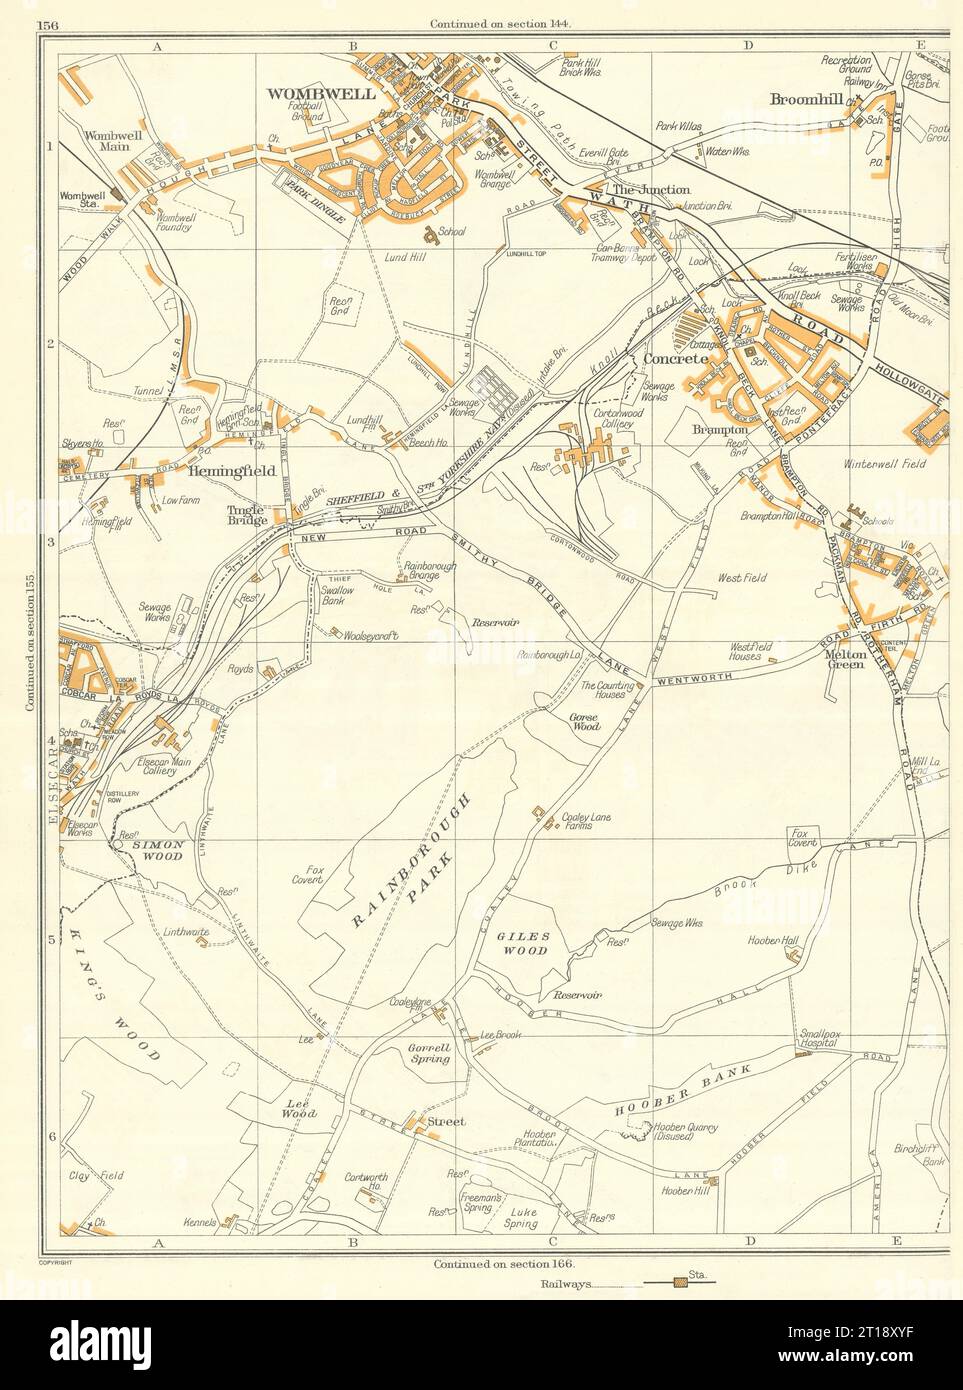 YORKSHIRE Broomhill Wombwell Brampton Hoyland Hemingfield Elsecar 1935 old map Stock Photo